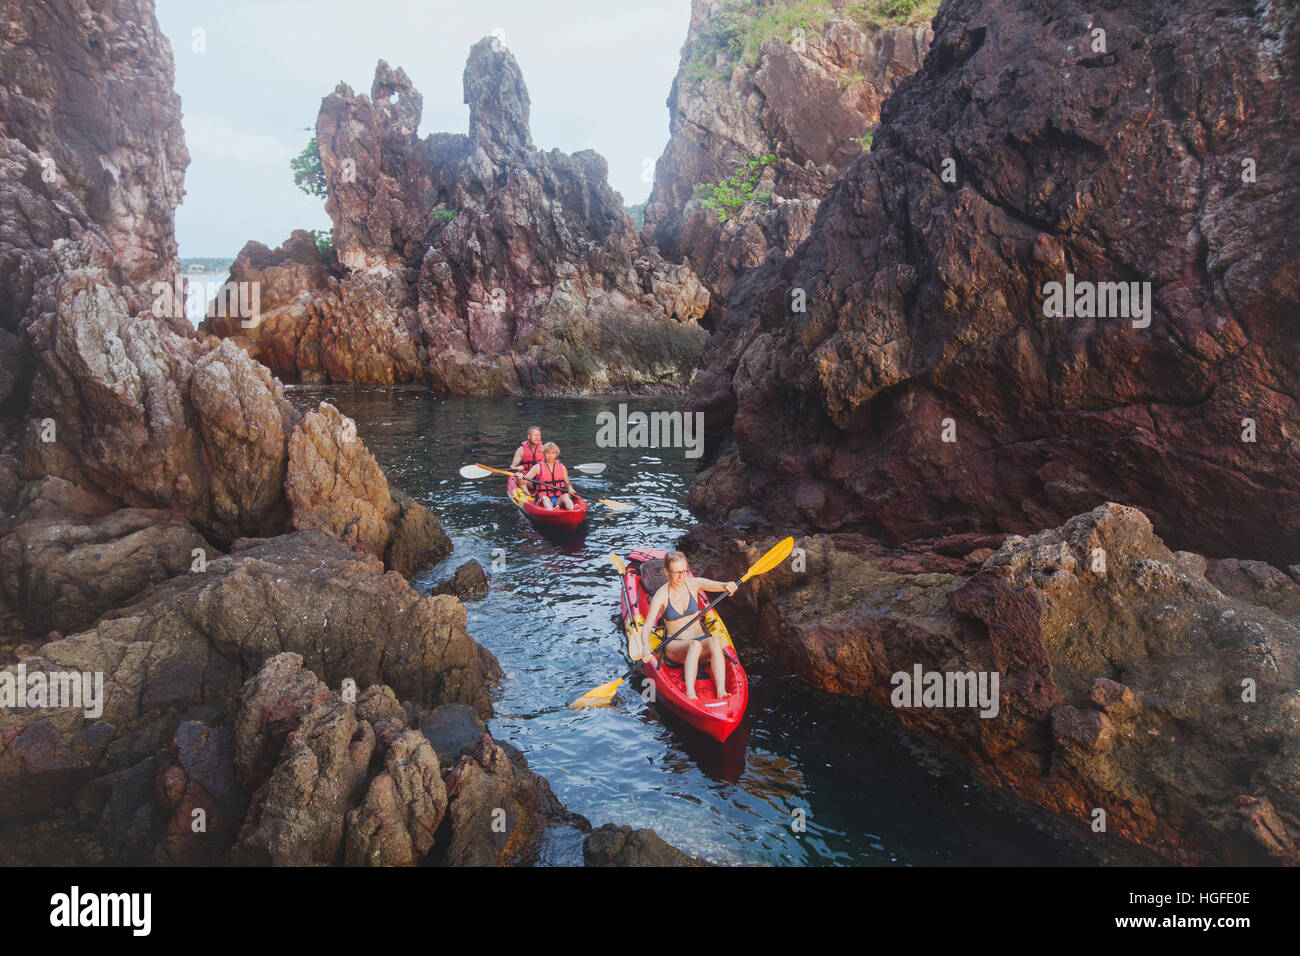 kayaking, adventure travel, group of people on kayaks between cliffs Stock Photo